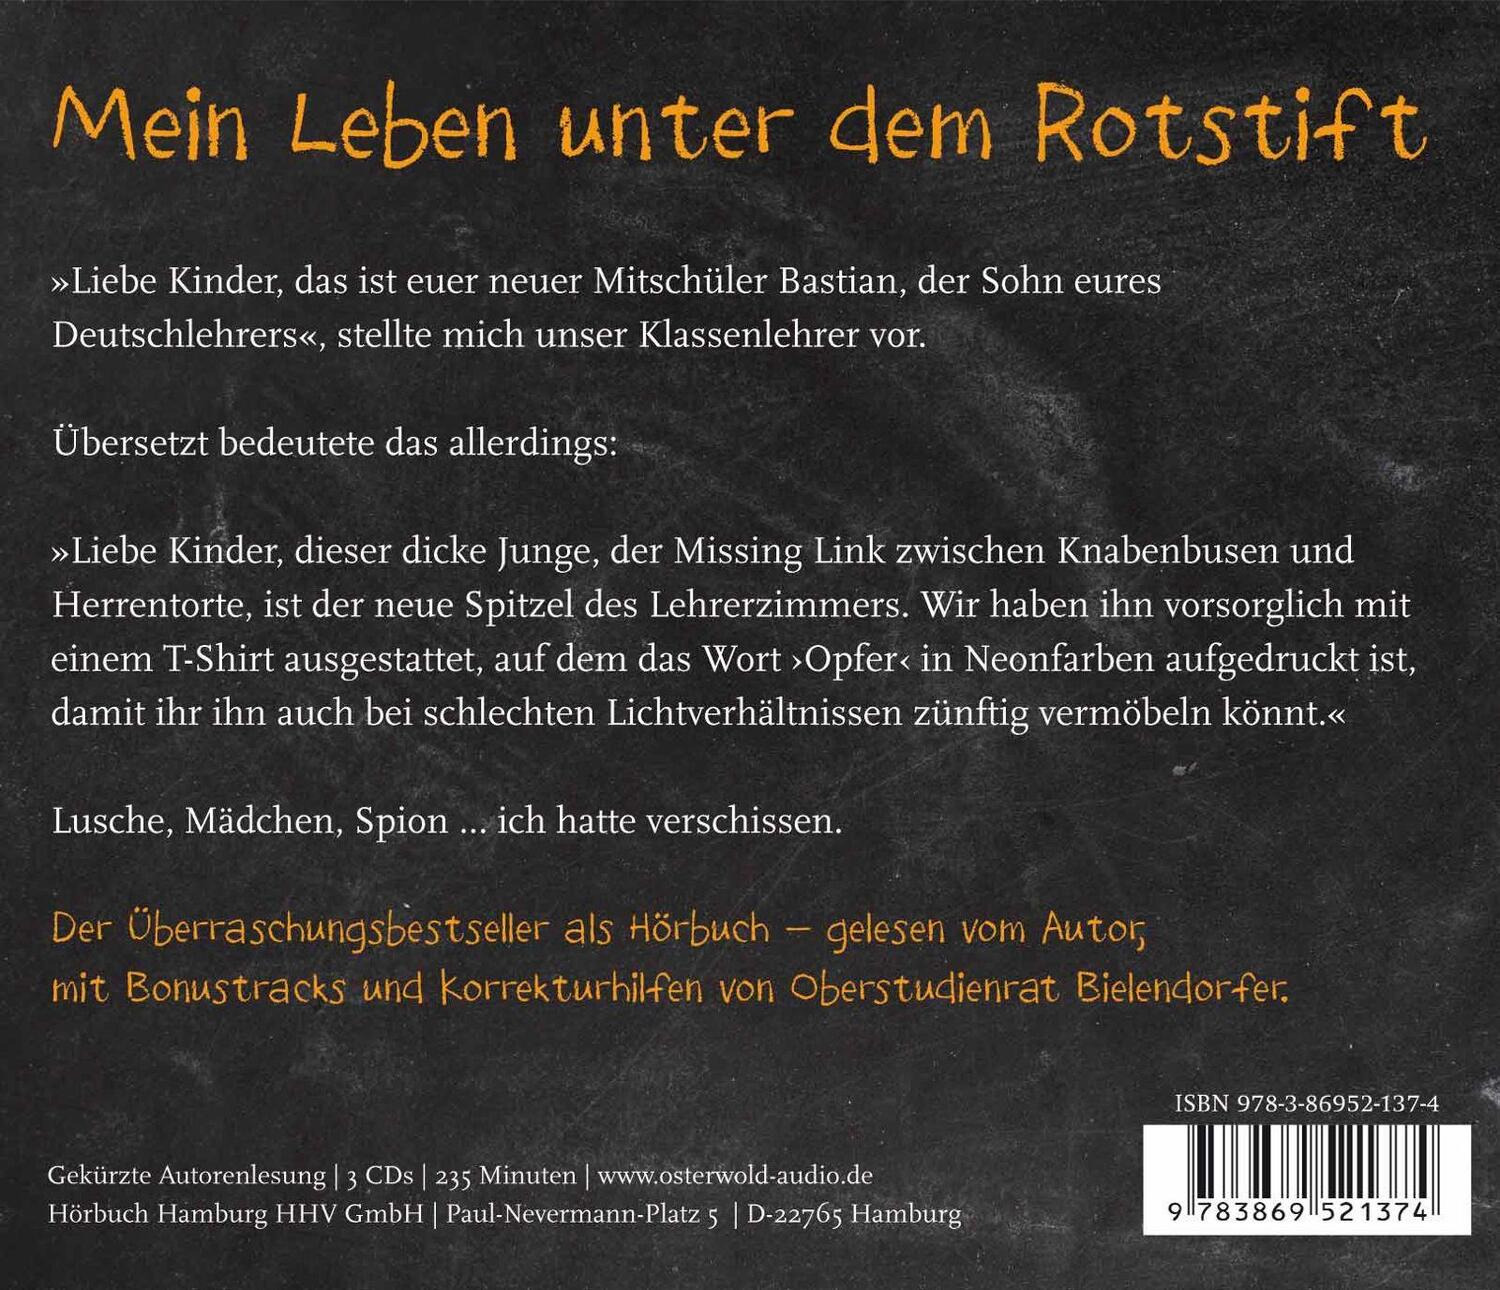 Rückseite: 9783869521374 | Lehrerkind | Lebenslänglich Pausenhof | Bastian Bielendorfer | CD